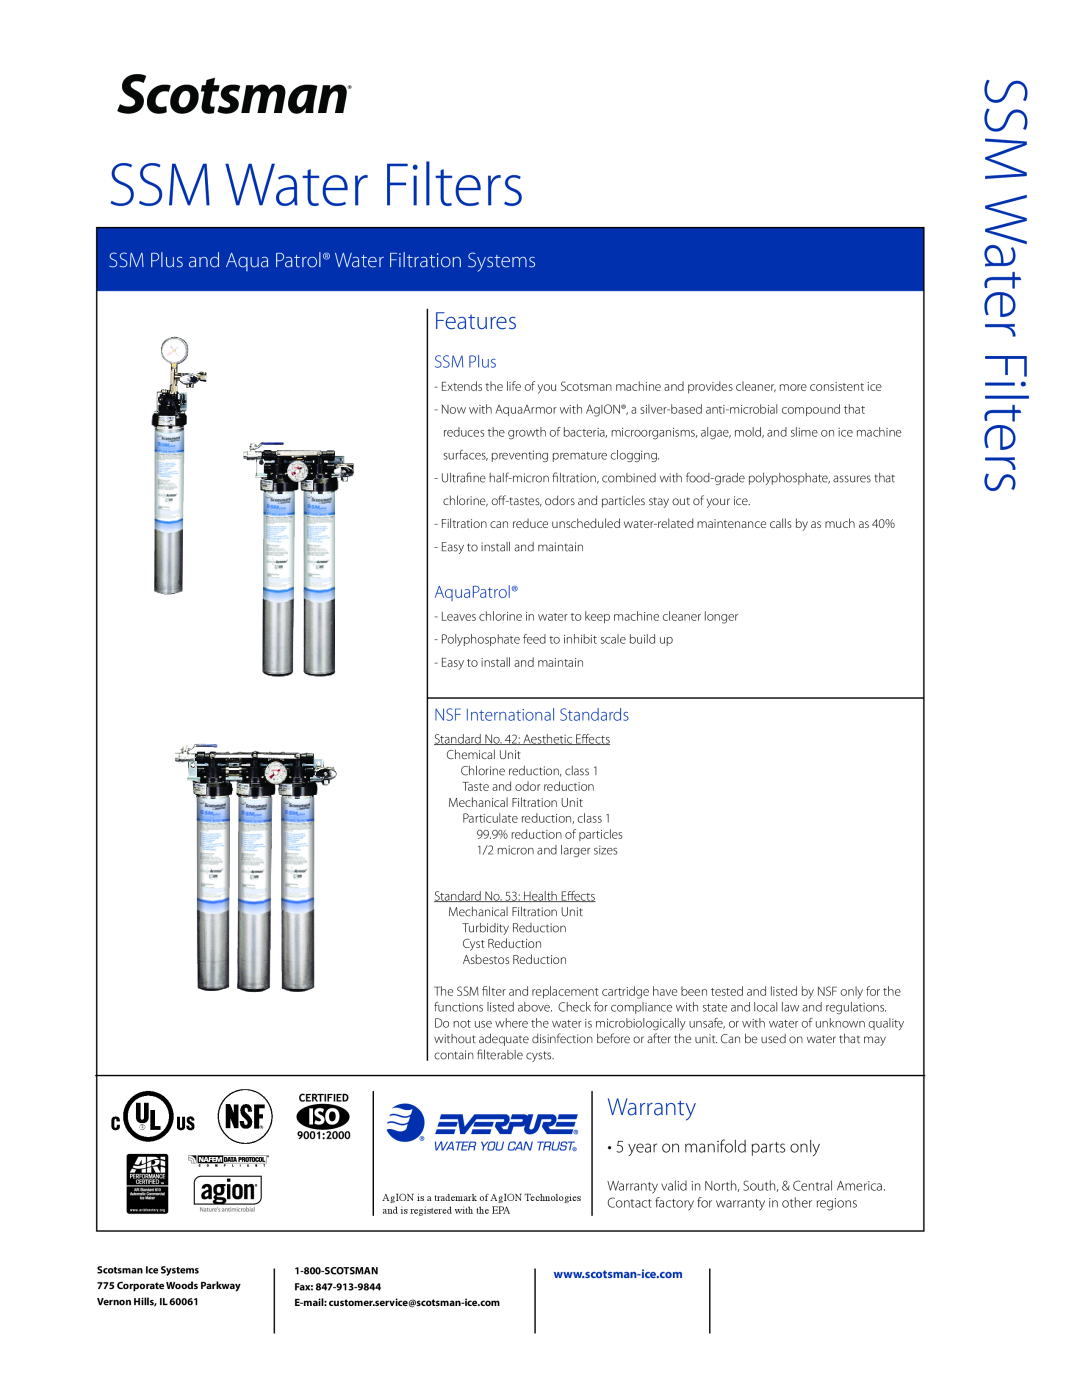 Scotsman Ice SC10RC40 SC10, SSMRC6, SSMRC1 warranty Scotsman, Features, Warranty, SSM Water Filters, SSM Plus, AquaPatrol 